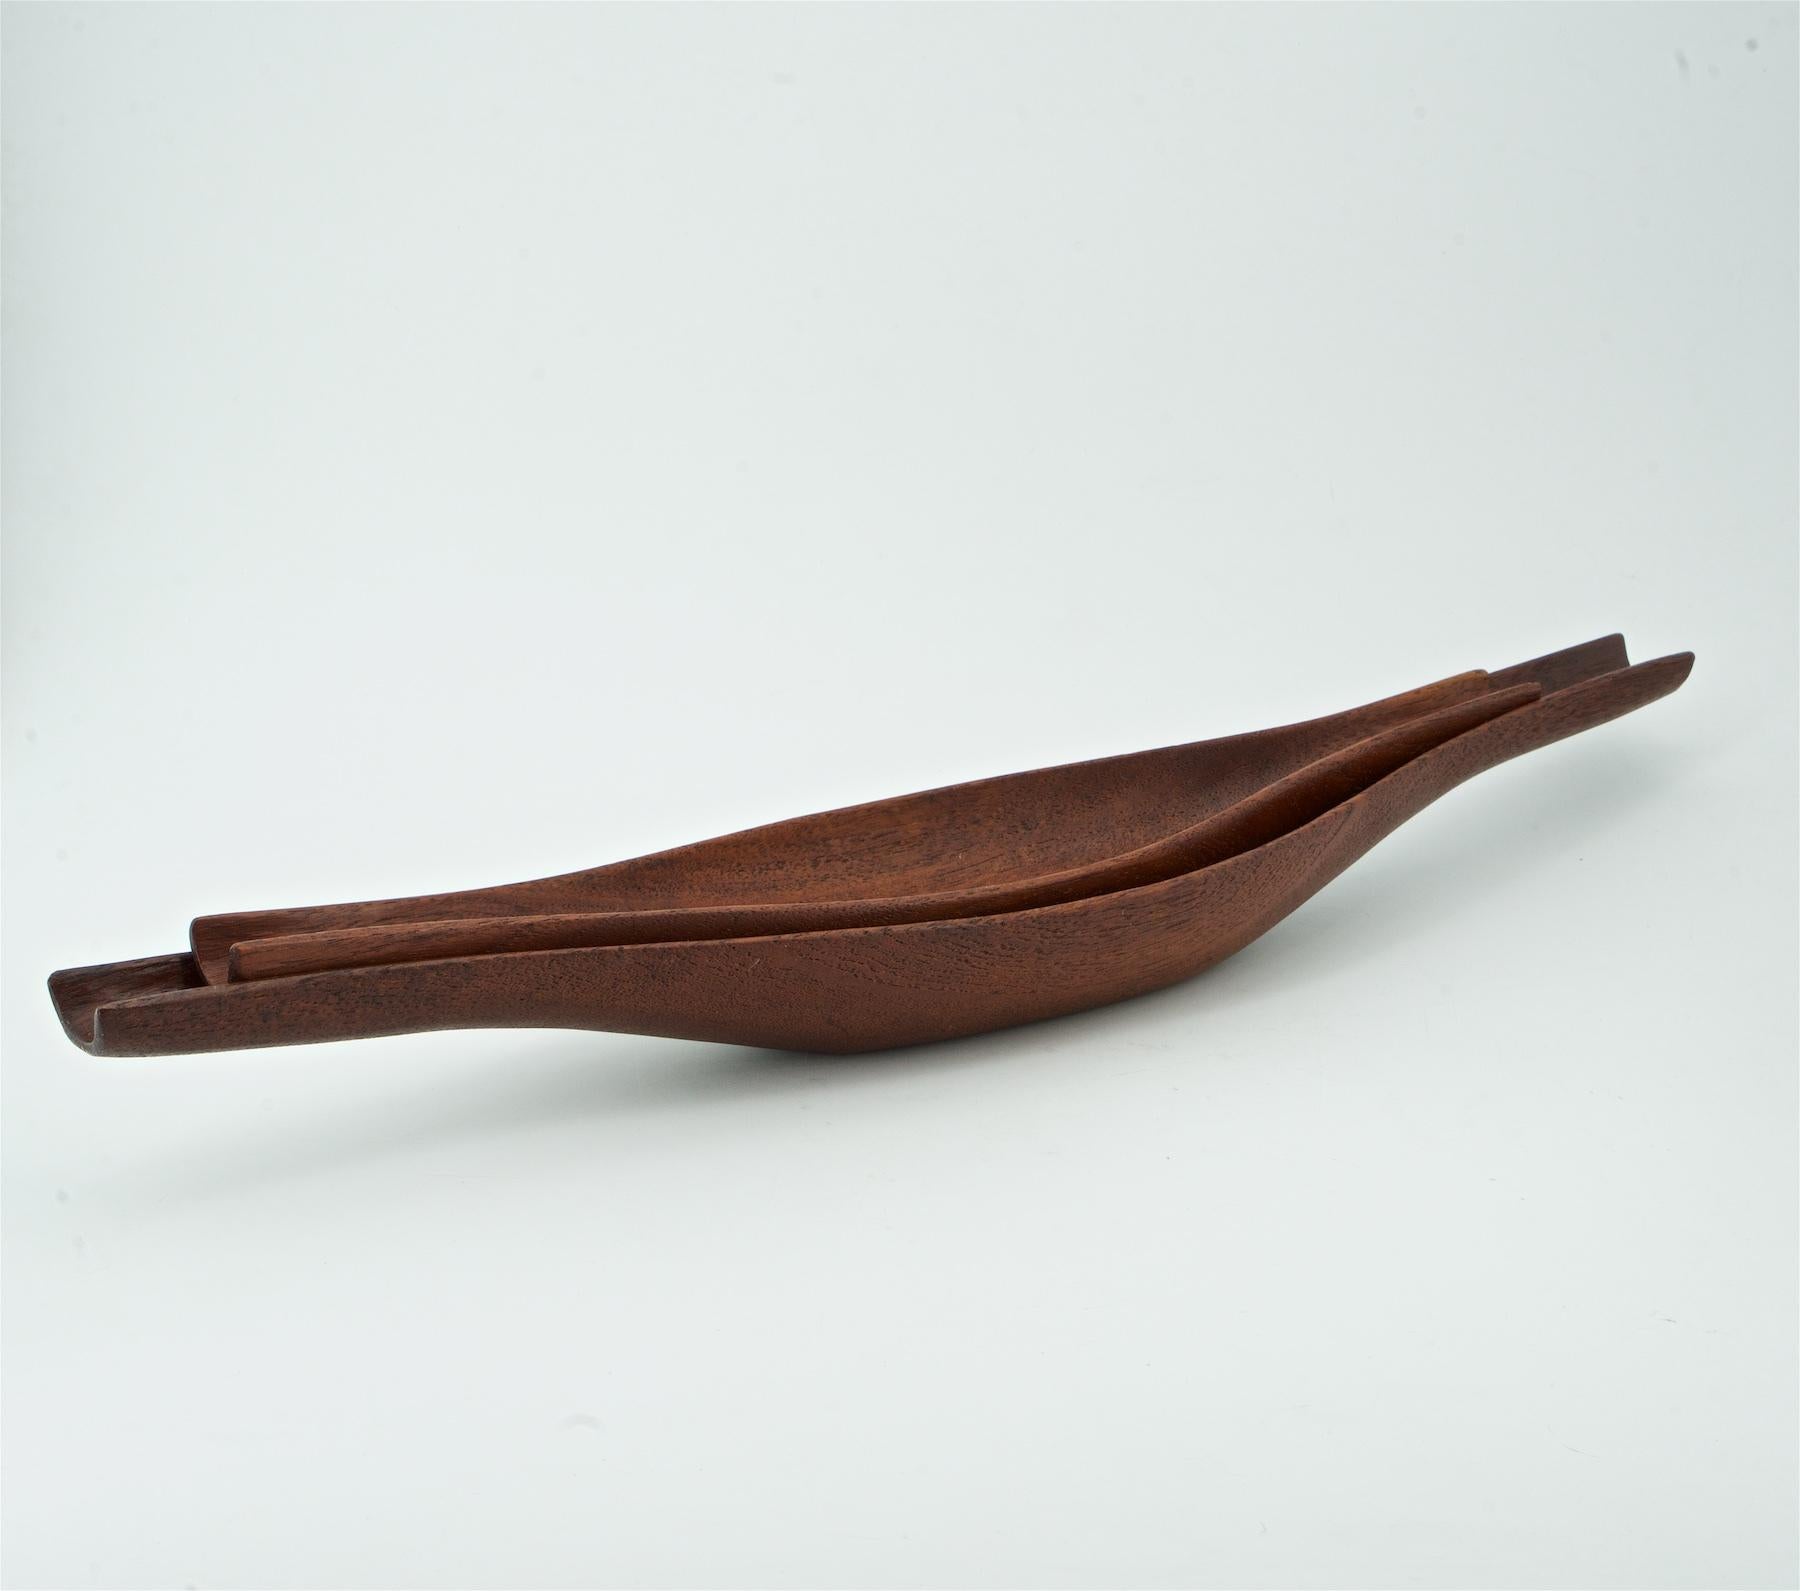 Suédois 1950s Scandinavian Stig Sandqvist Hand Carved Teak Canoe Bowls Sculptures Design en vente